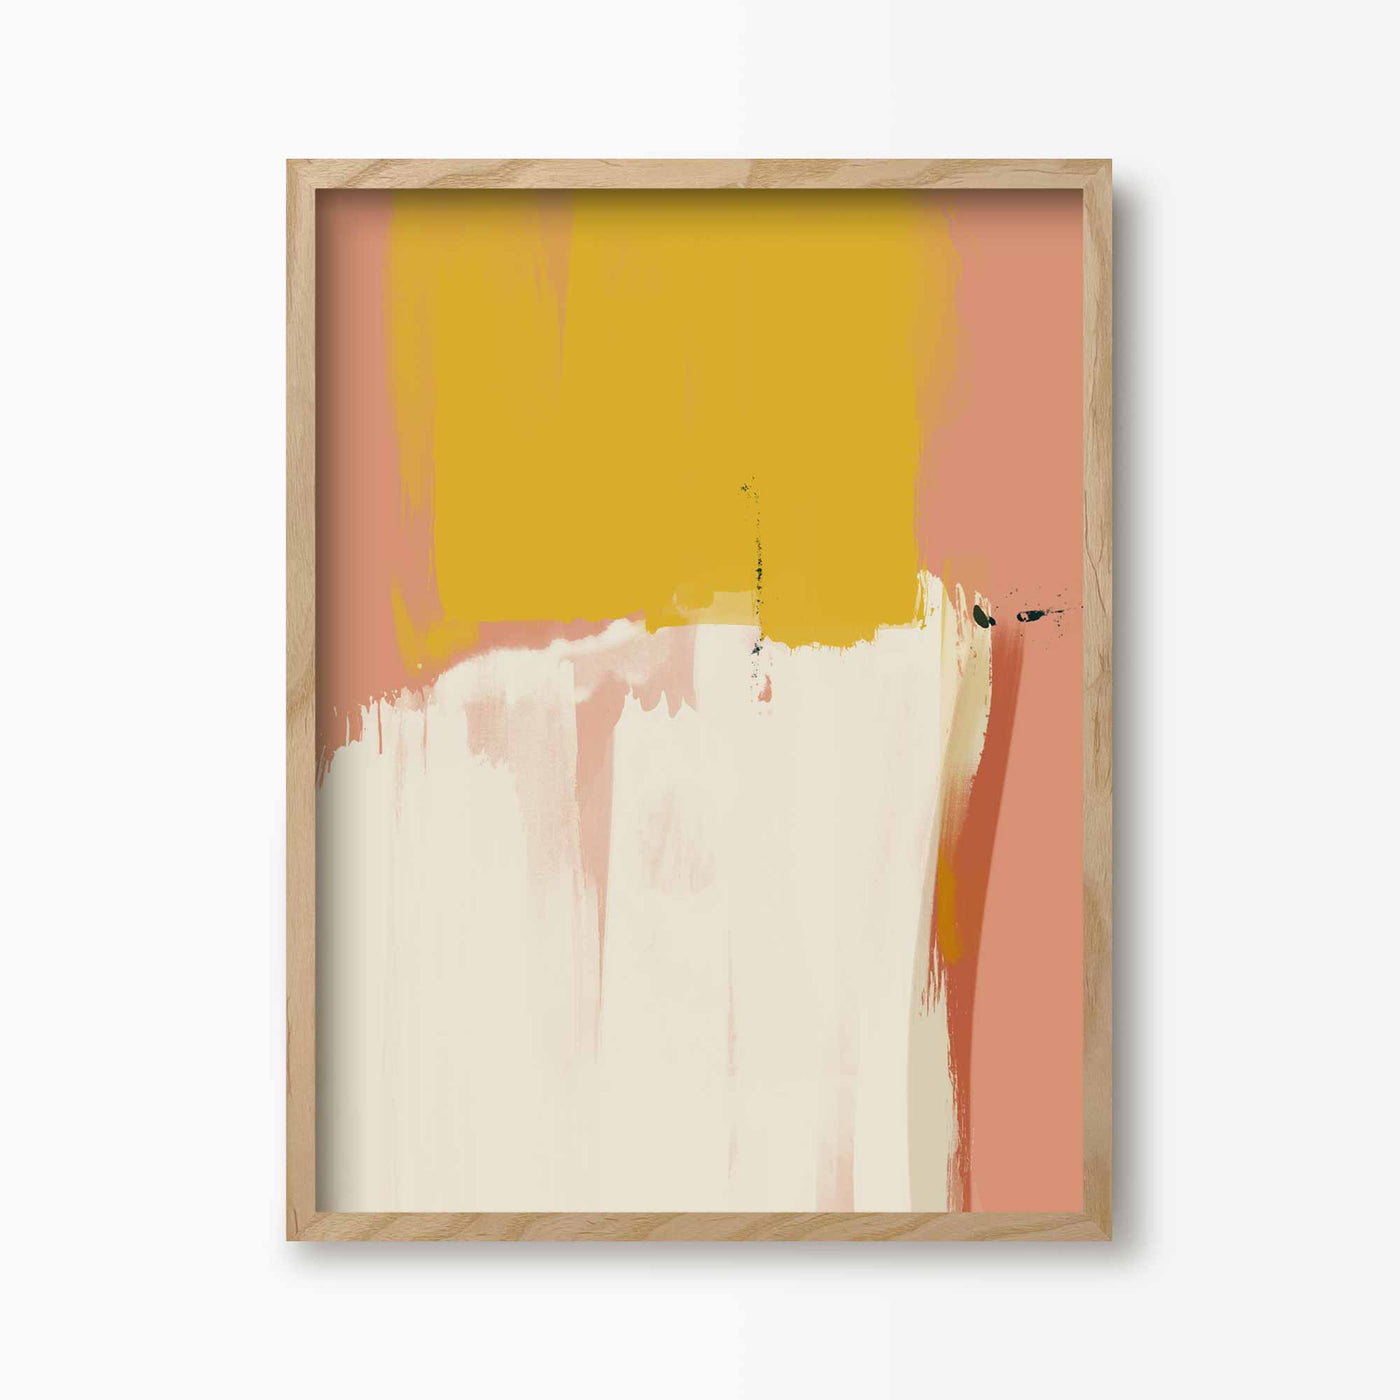 Green Lili 30x40cm (12x16") / Natural Frame Pink & Yellow Abstract Art Print